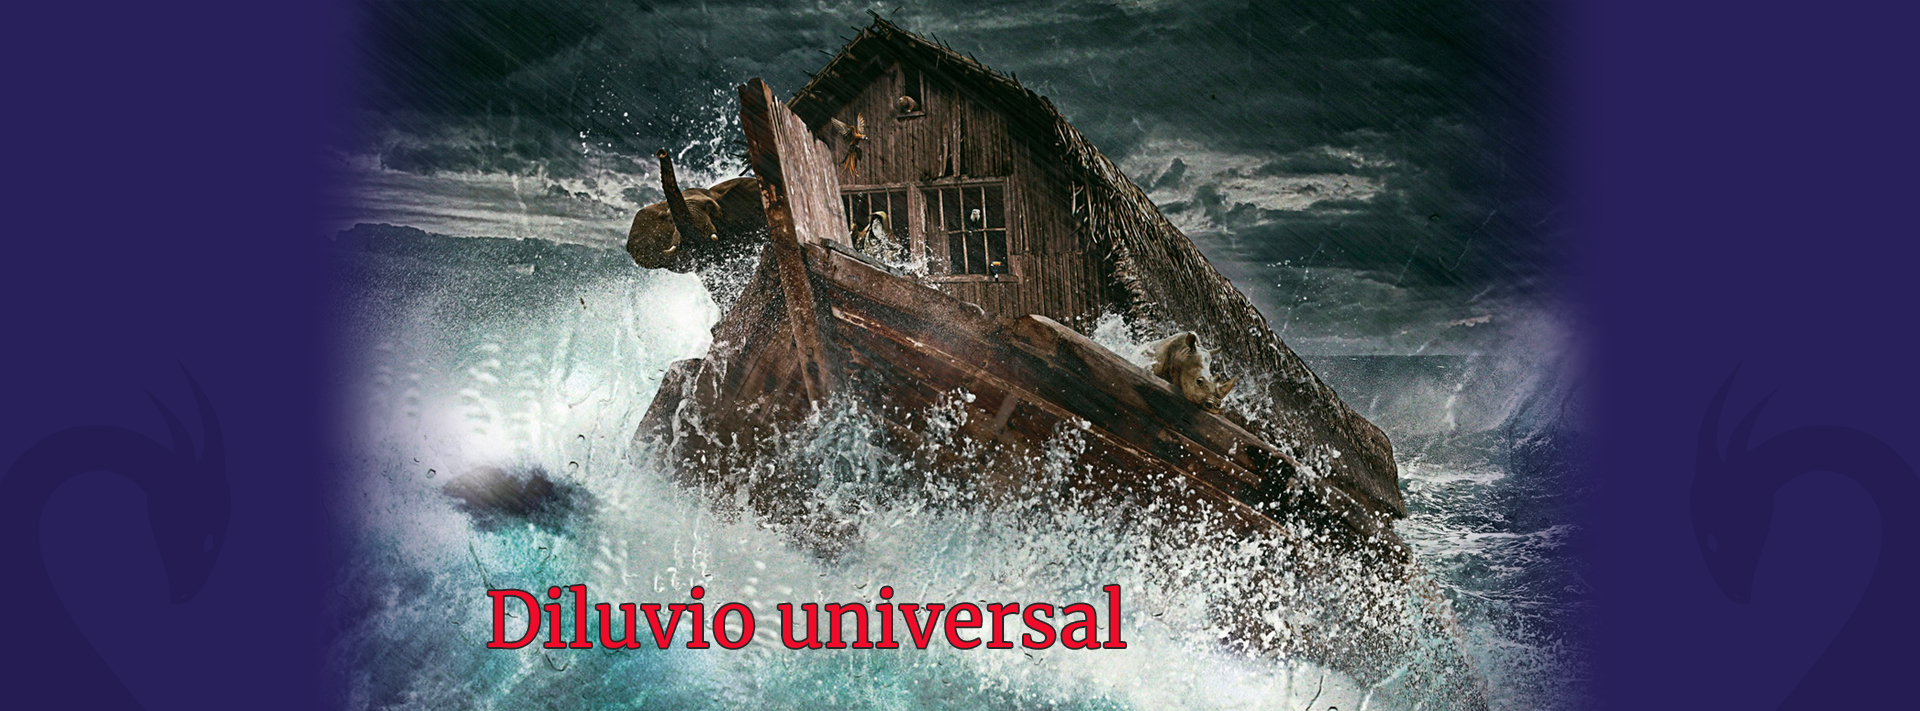 Portada diluvio universal